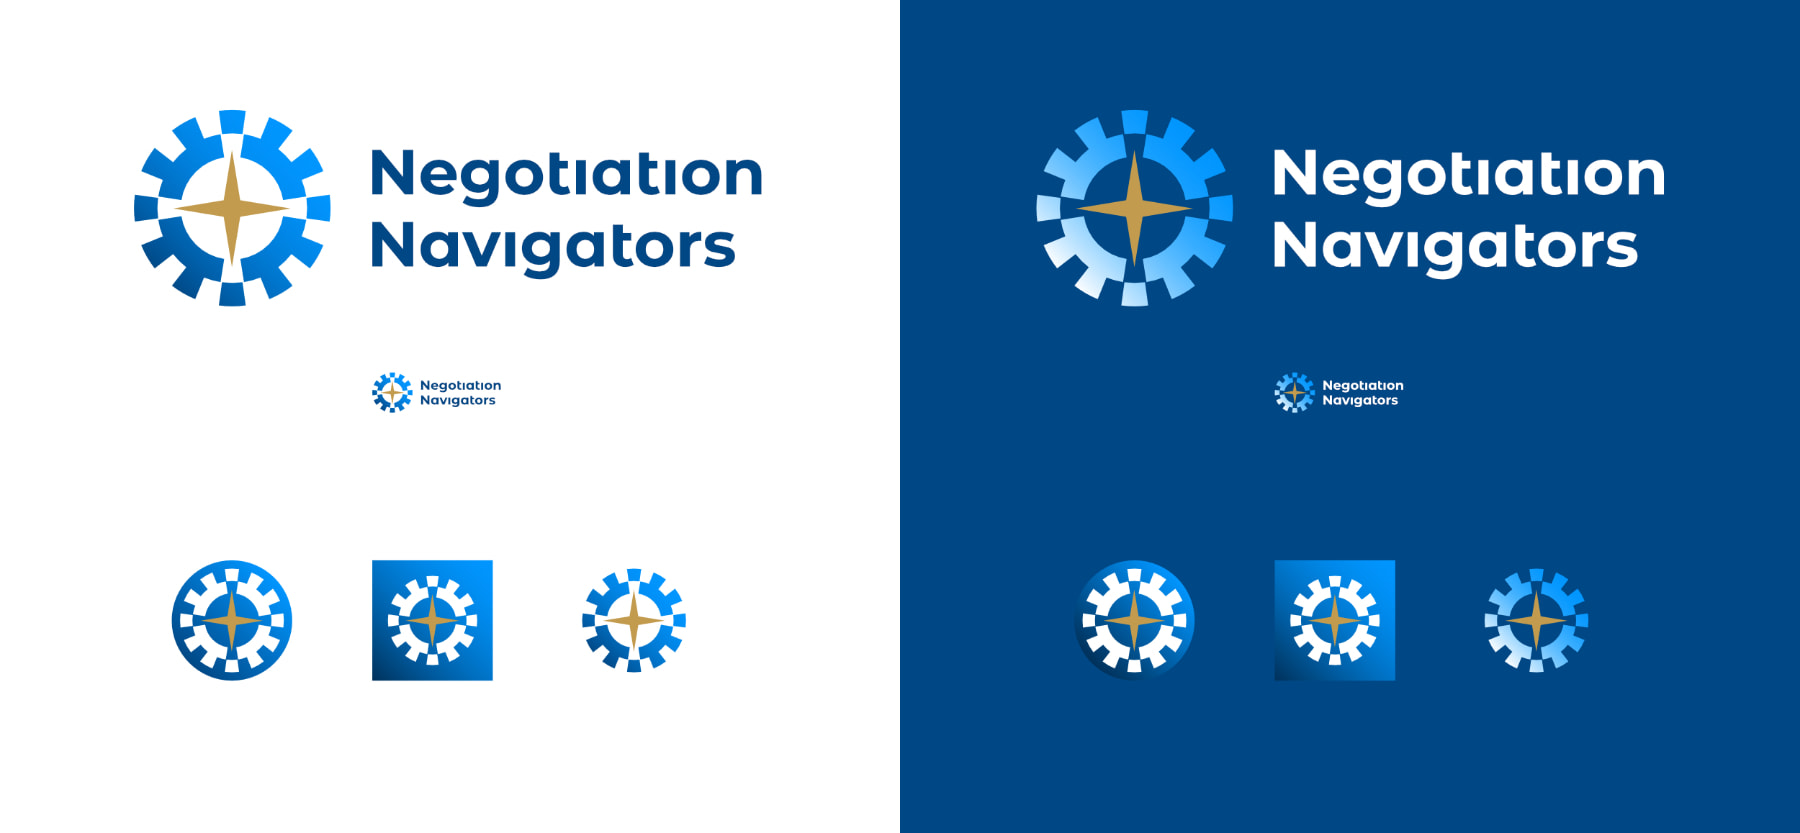 Negotiation Navigators logo - Rene Verkaart)